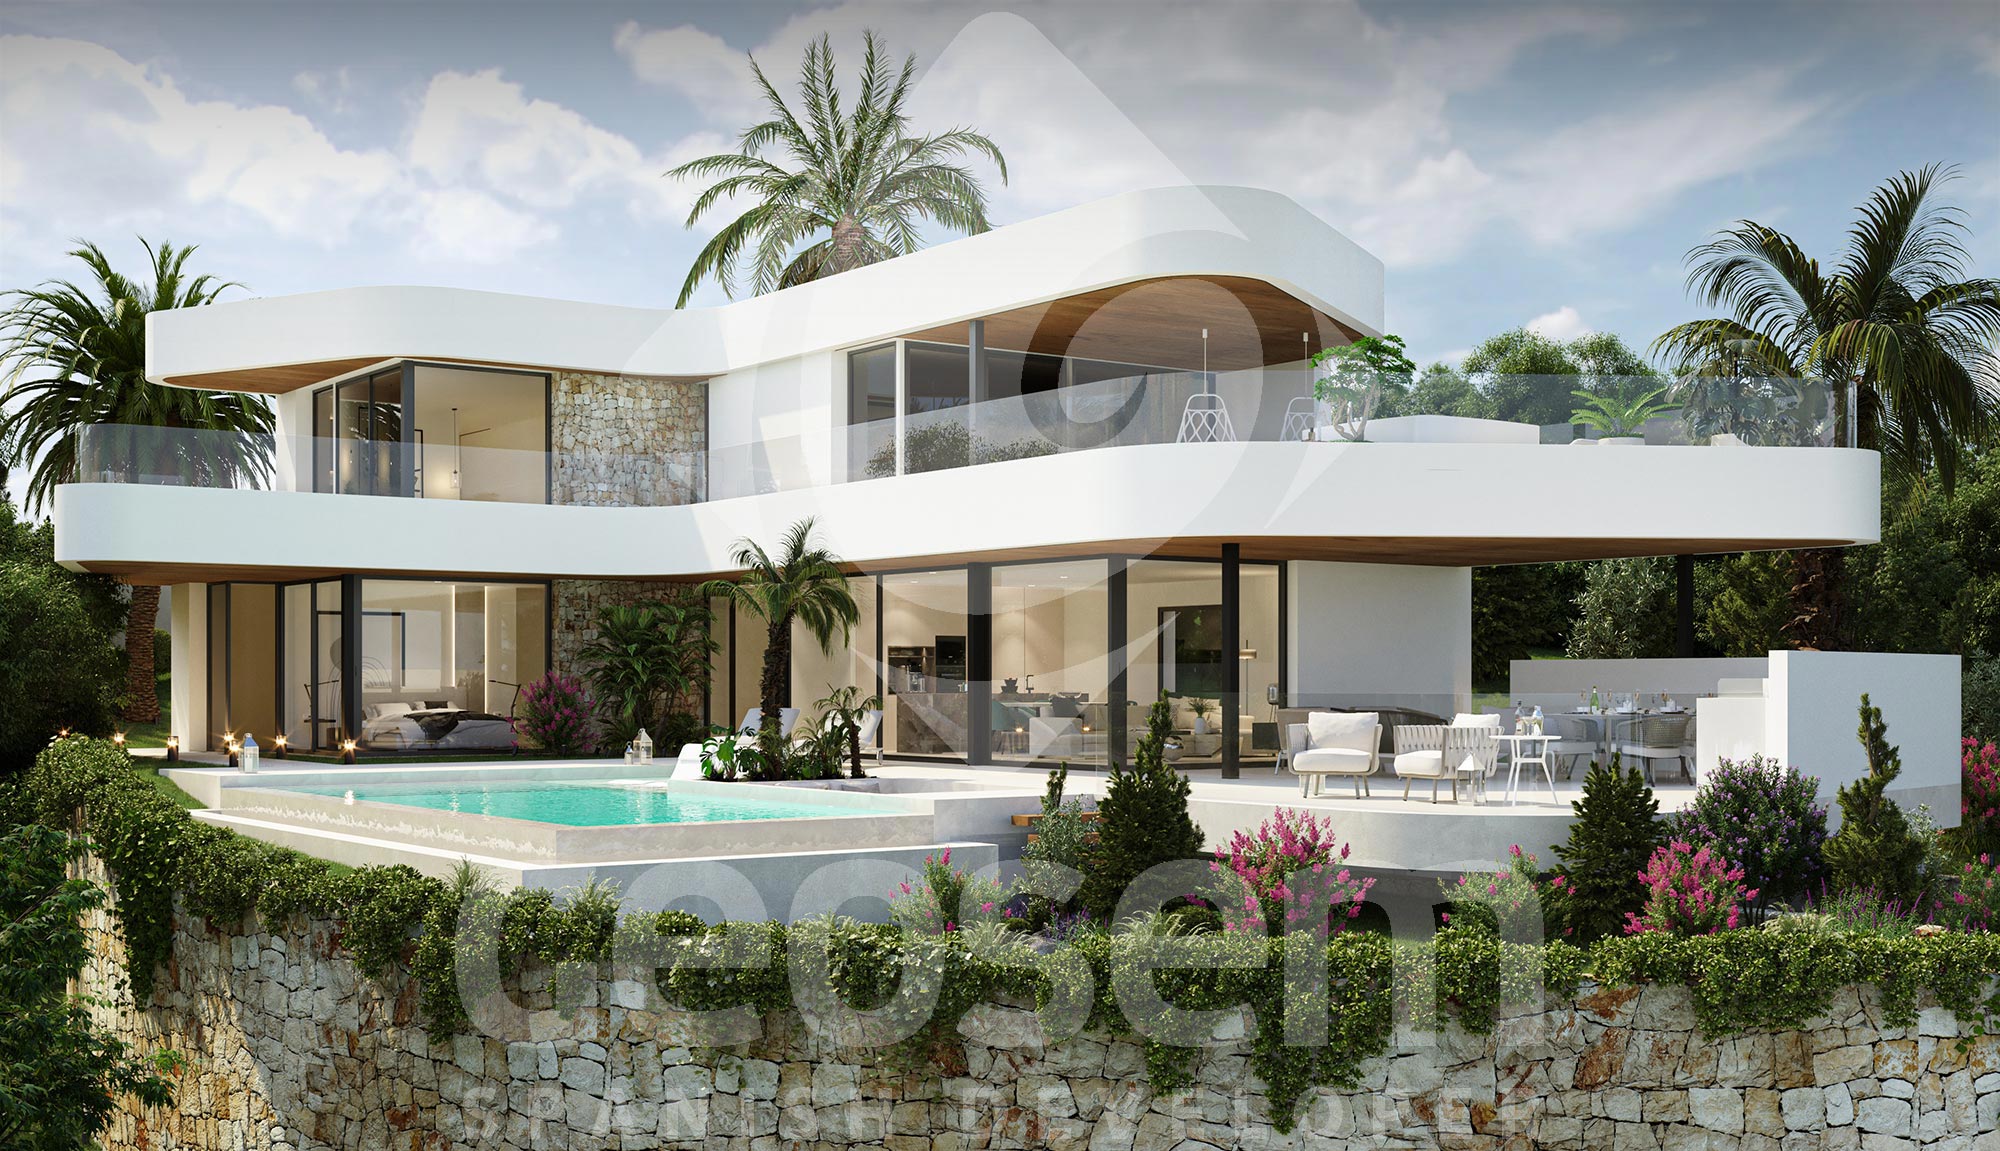 This villa is located in a quiet area of Cumbre del Sol, with impressive sea views